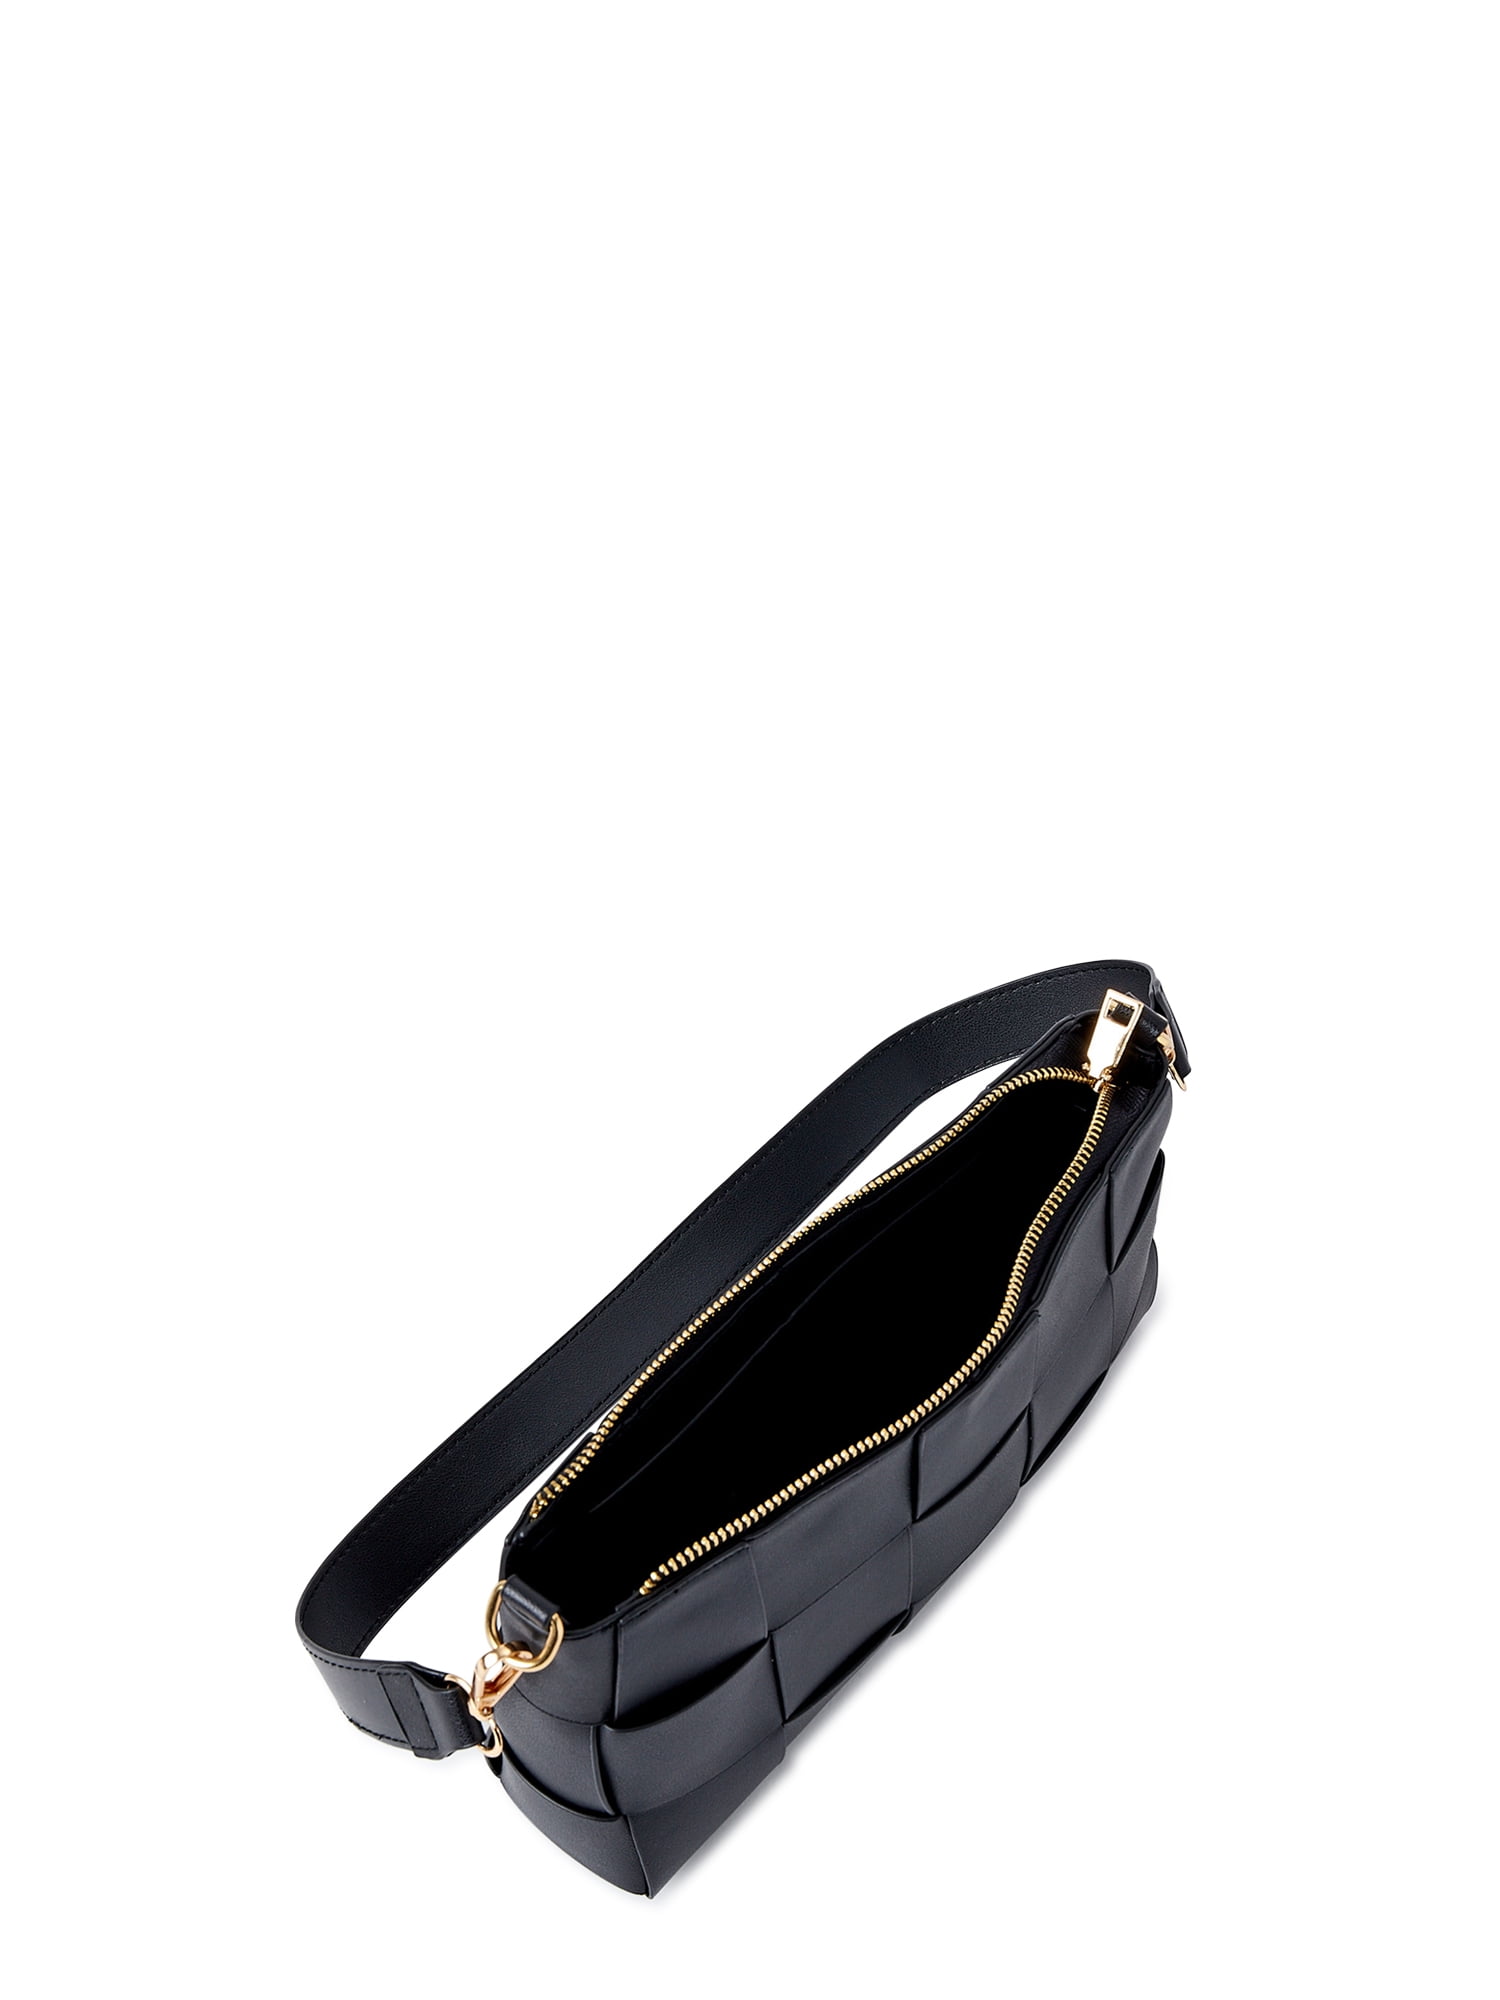 Jane & Berry Women's Woven Faux Leather Shoulder Bag Black